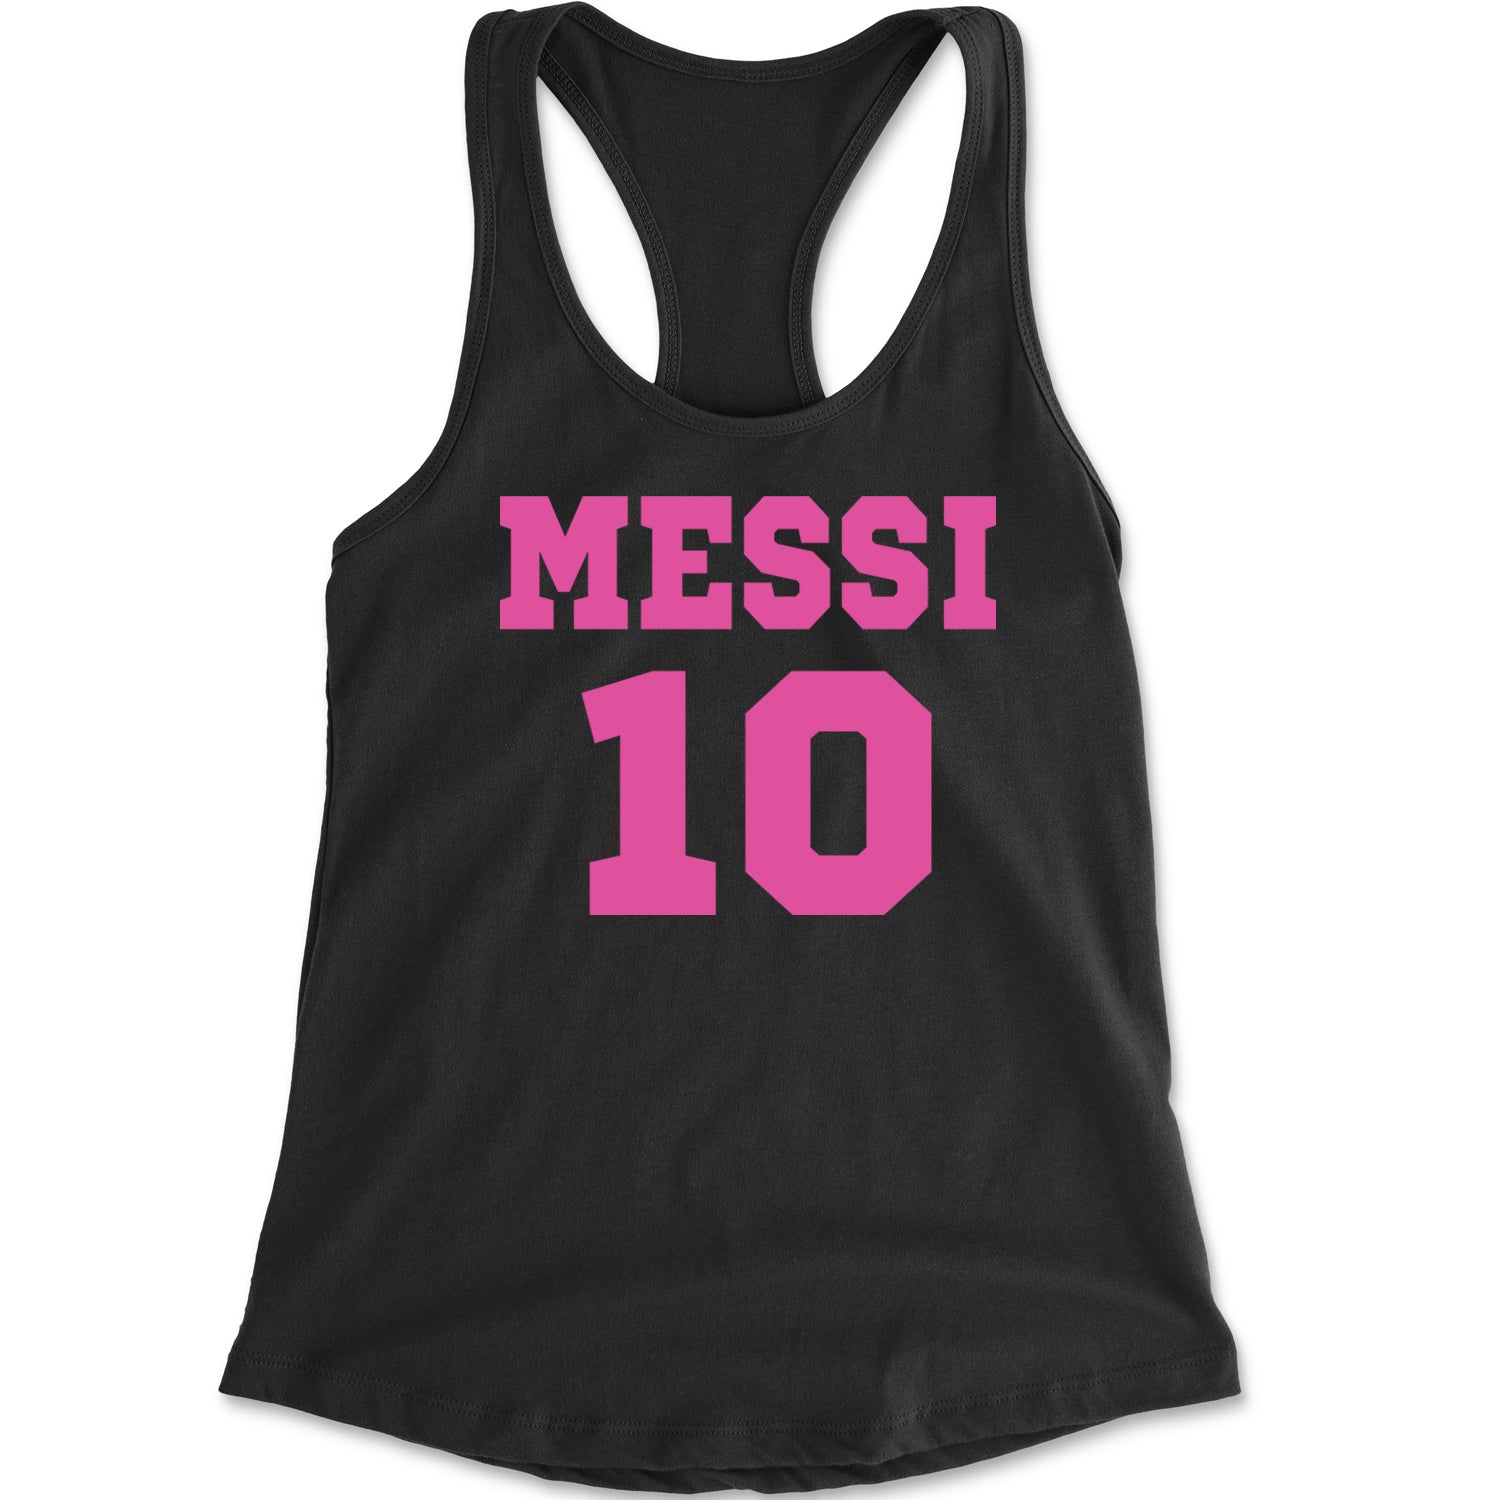 Messi World Soccer Futbol Messiami Racerback Tank Top for Women